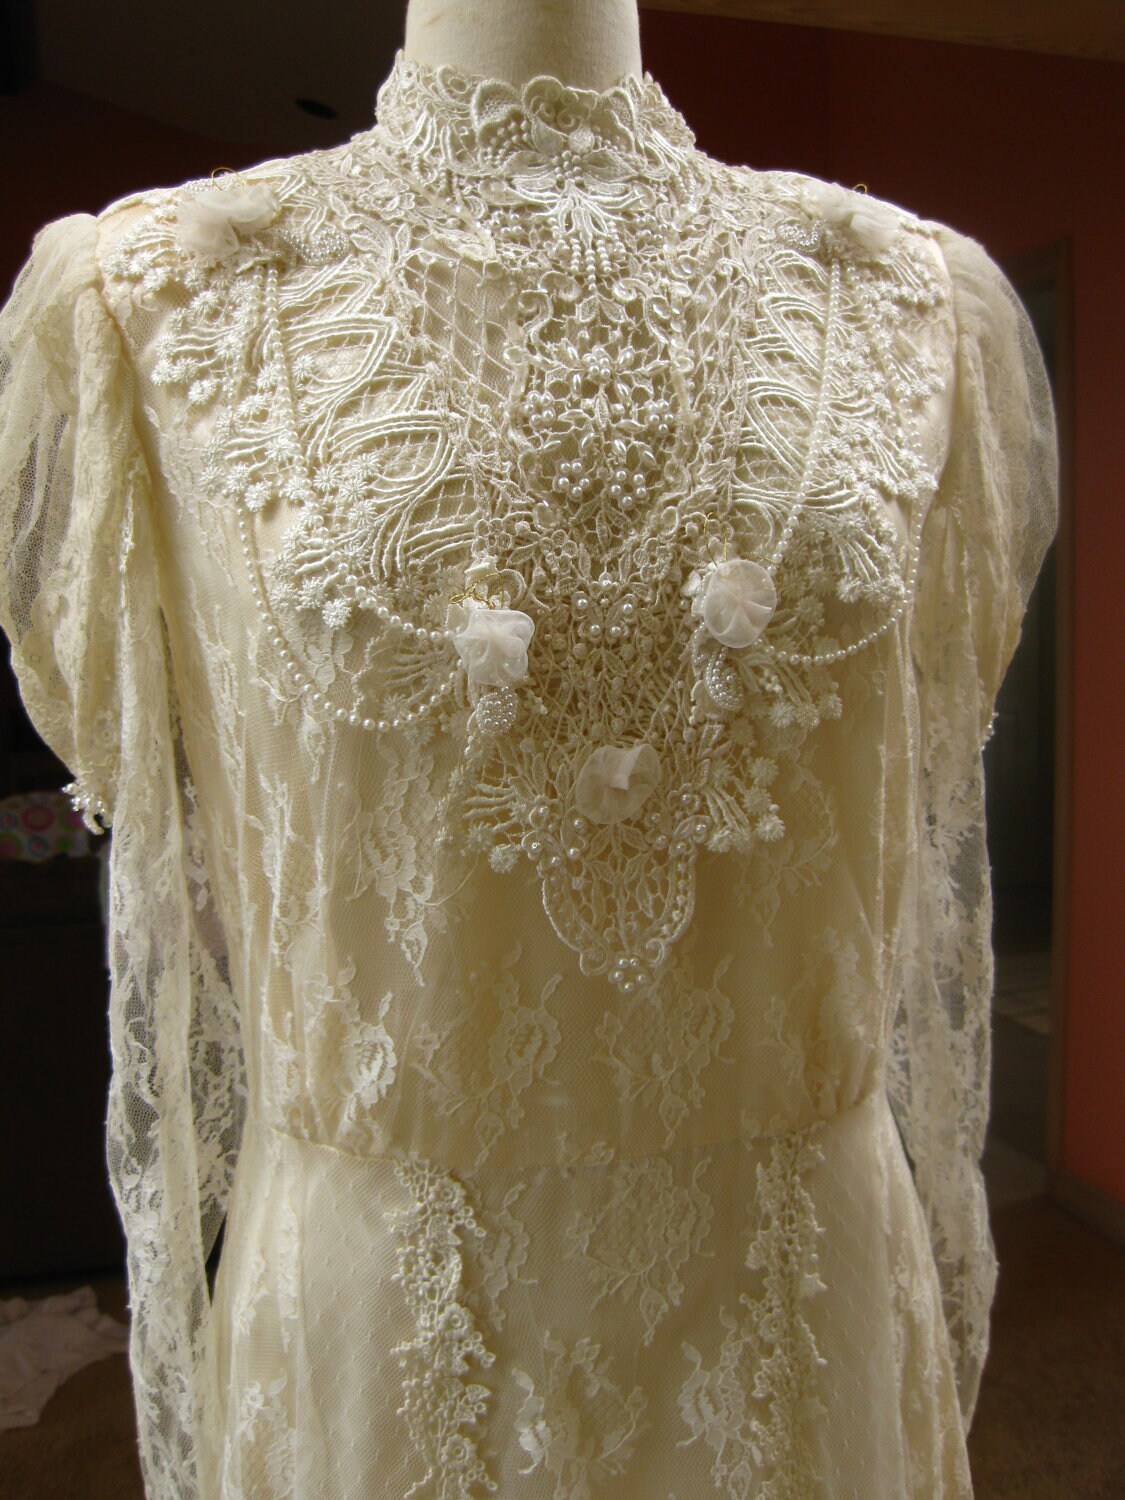 Susan Lane Country Elegance wedding dress Vitorian style